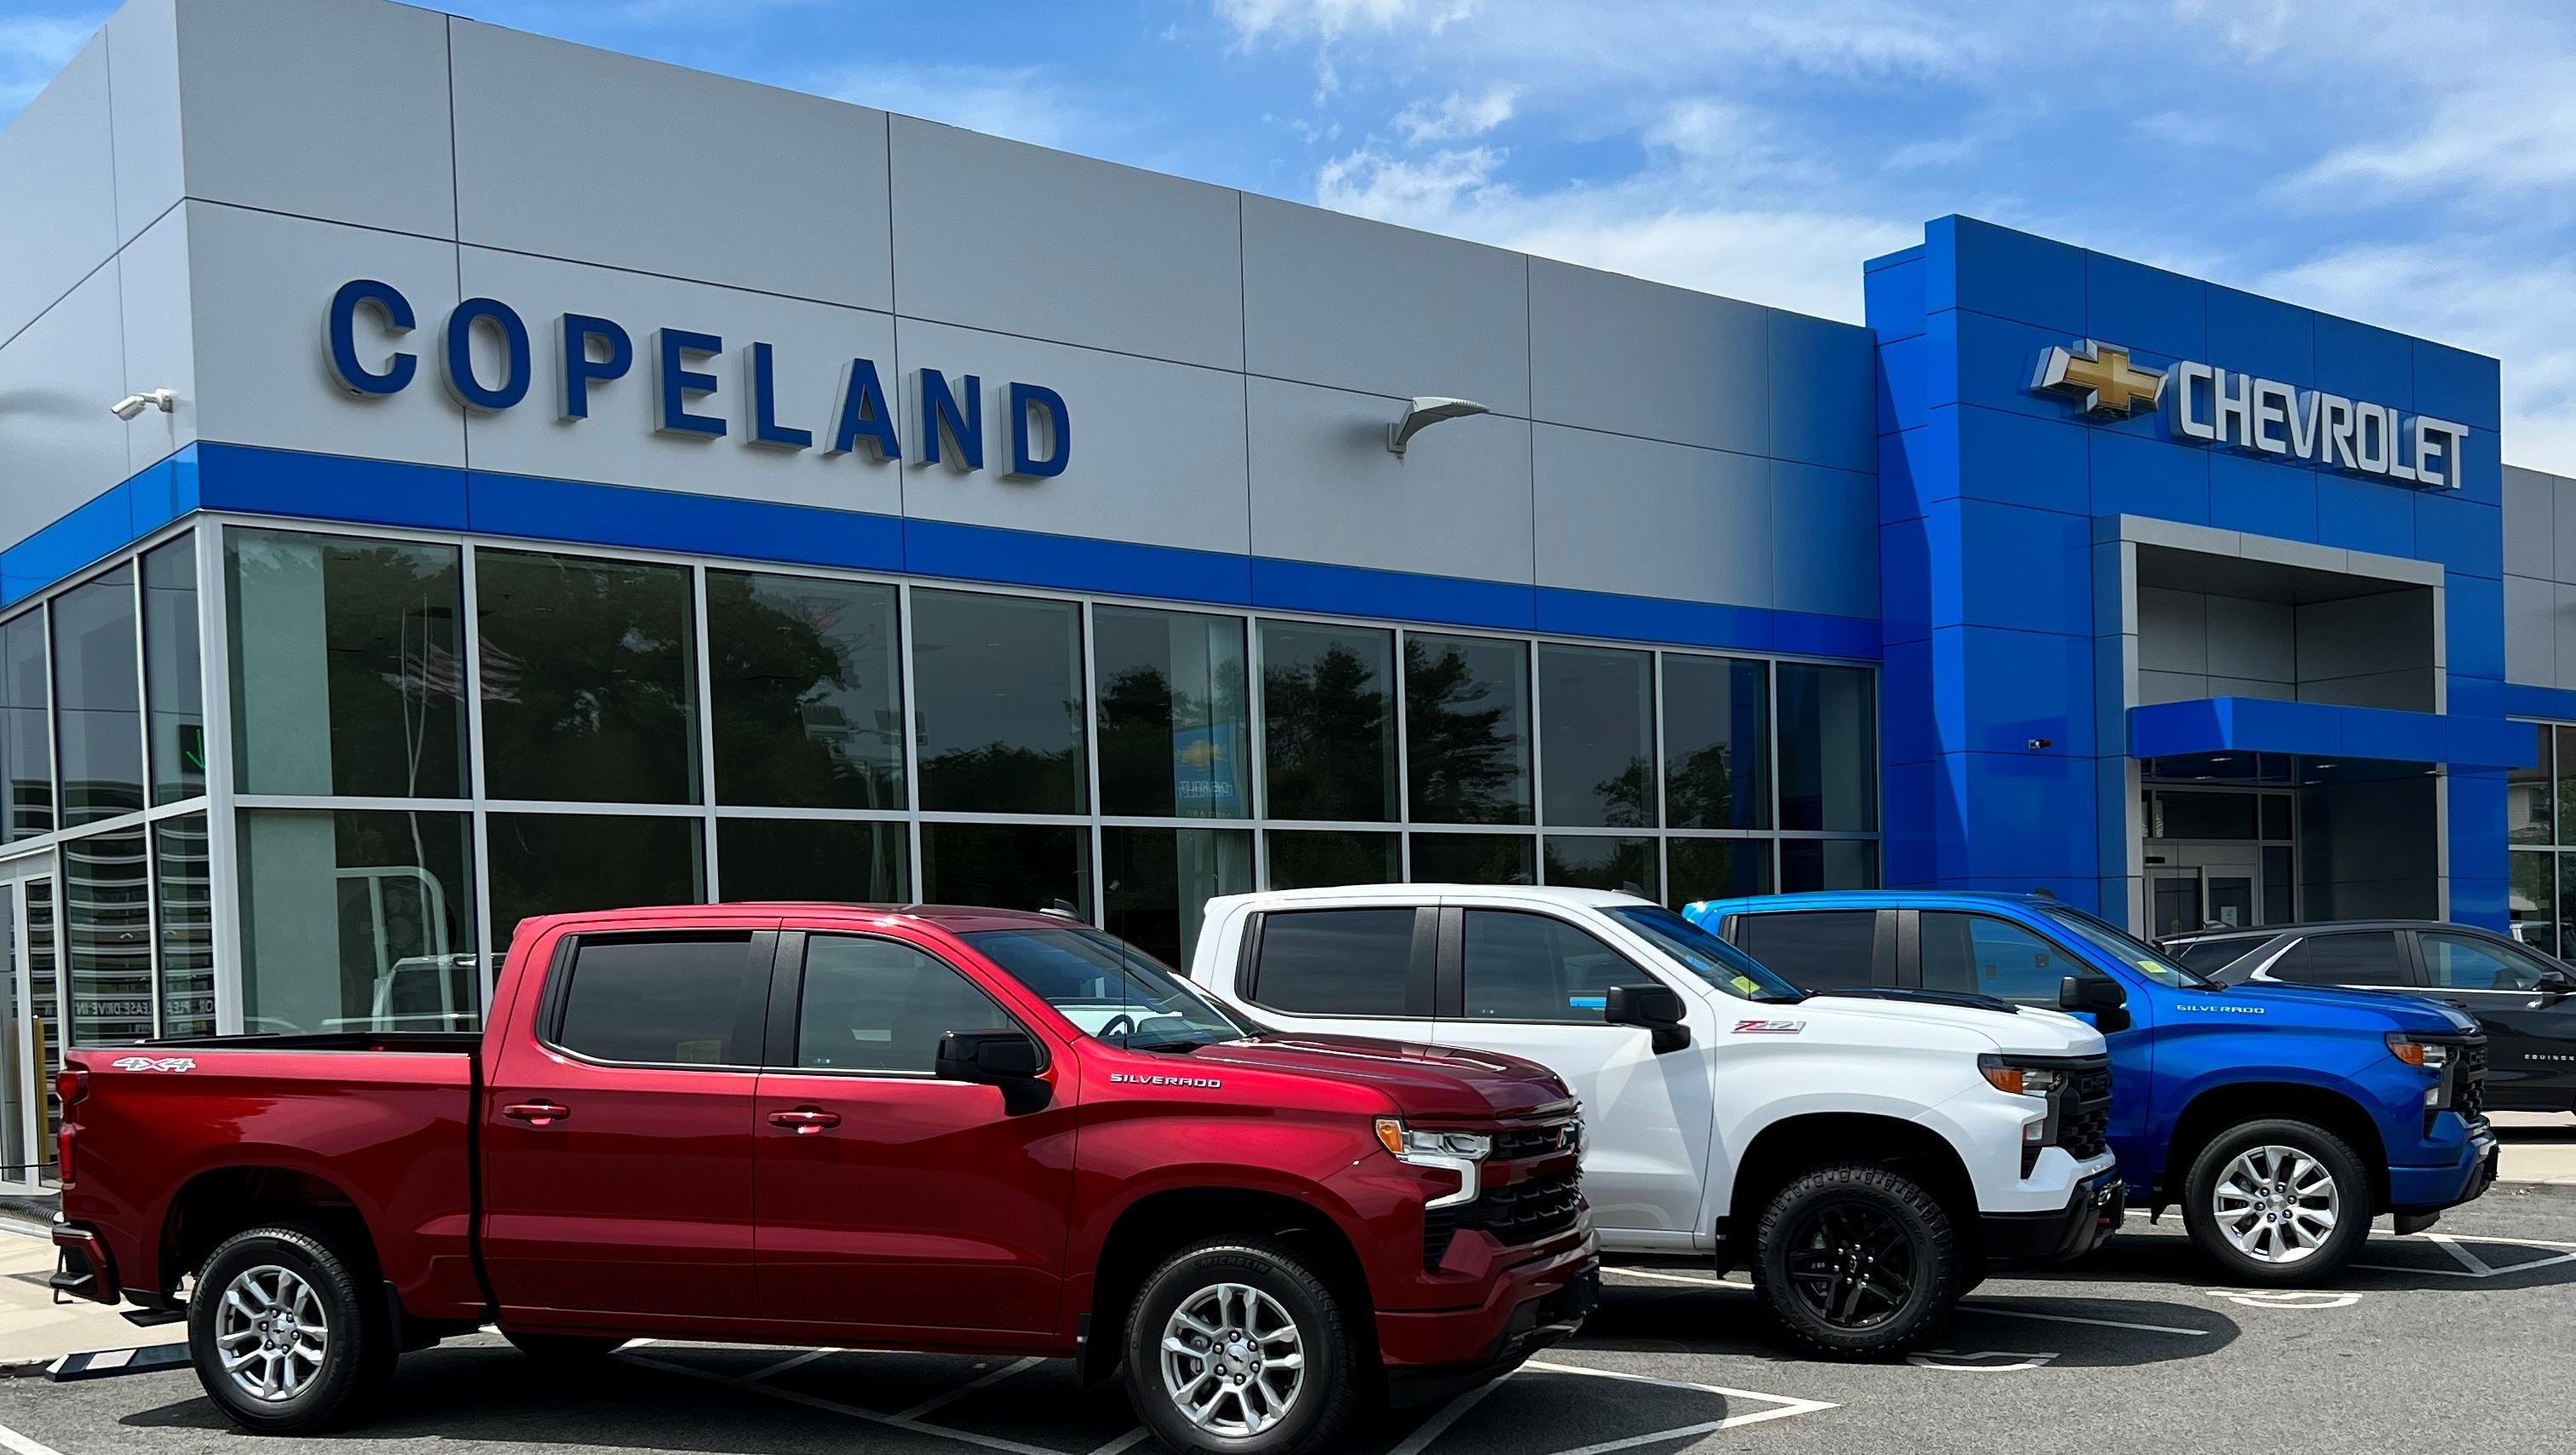 Copeland Chevrolet - Front 